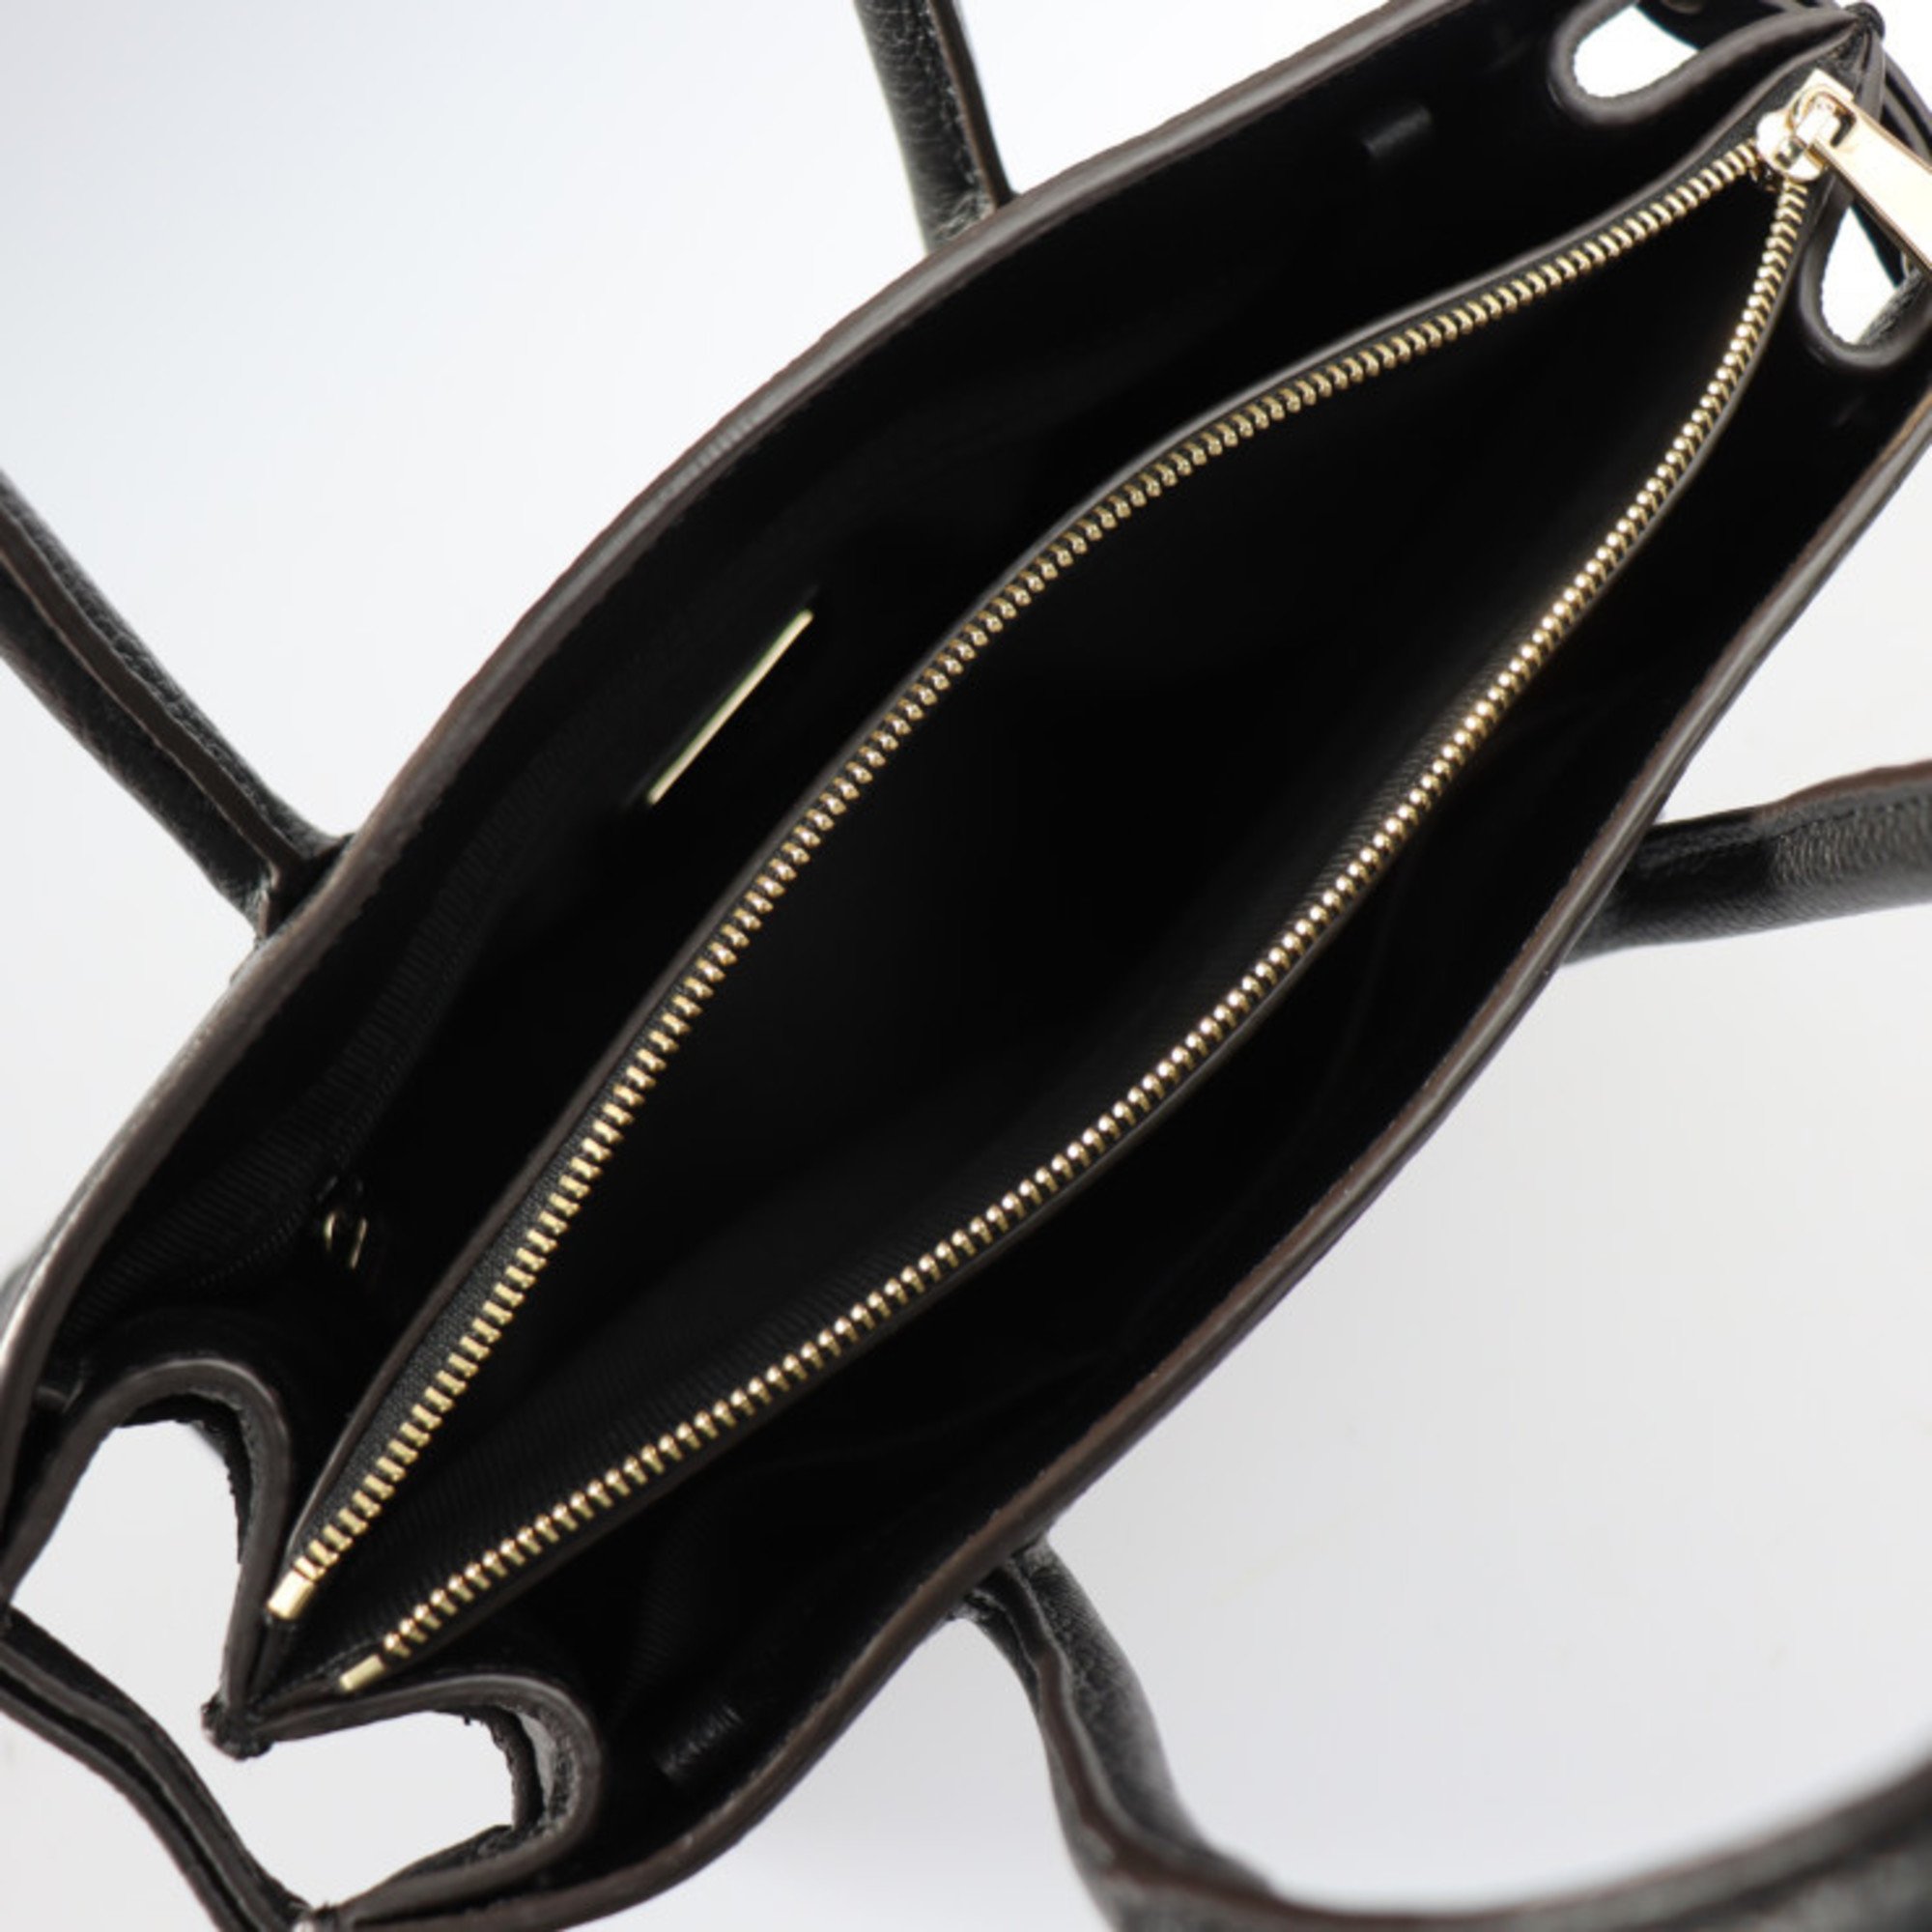 Furla PIN Tote S pin handbag leather black gold hardware 2WAY shoulder bag tote